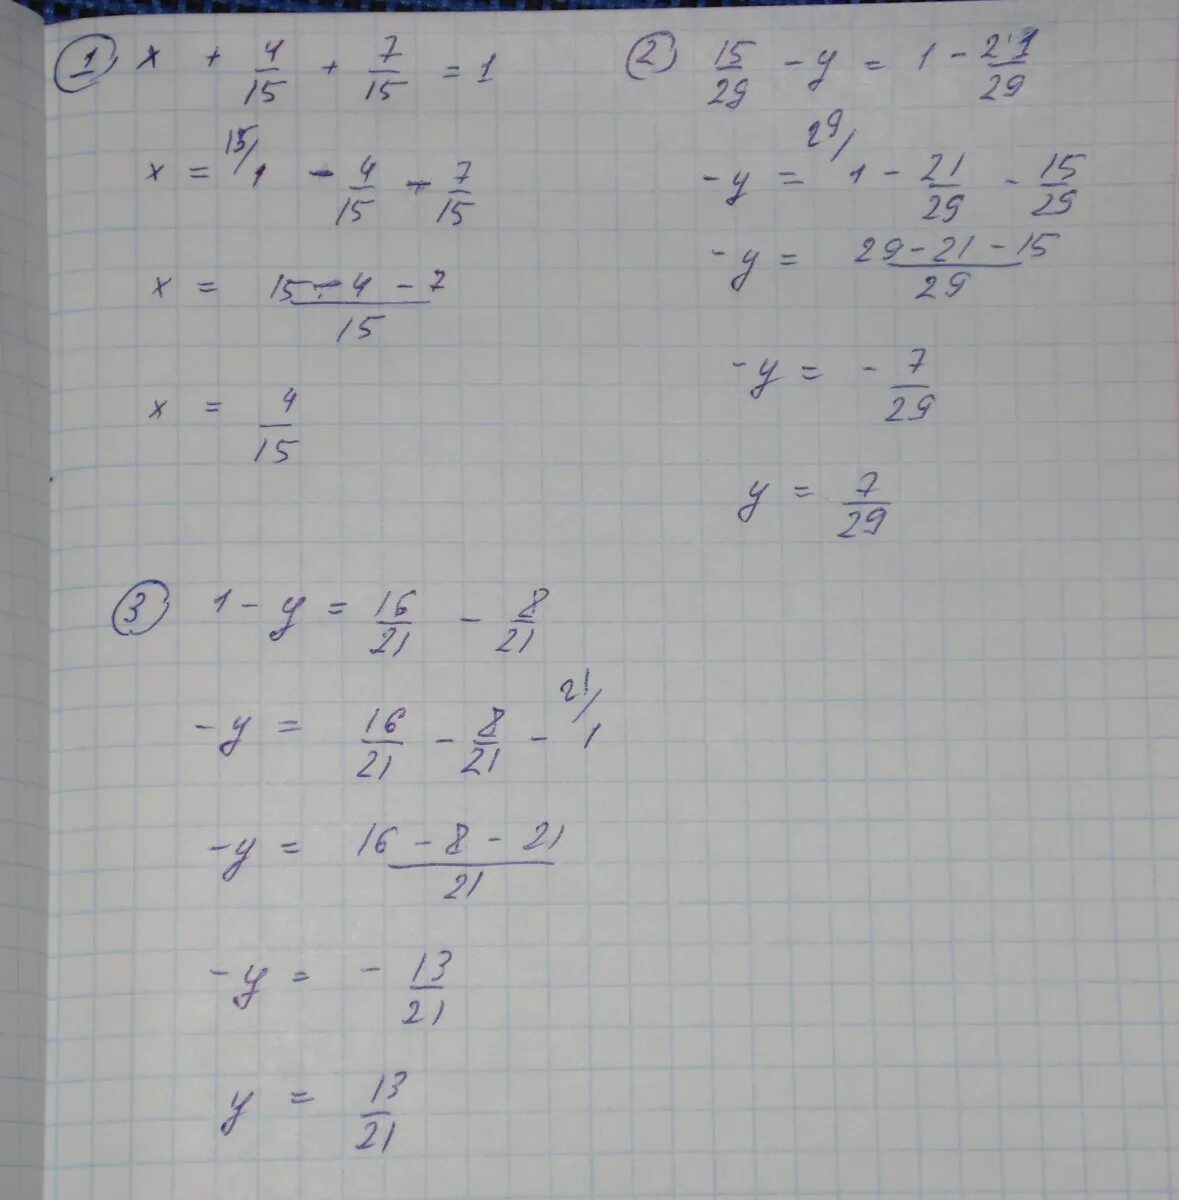 7x 8 4x 5 15 решите. Х:7+15=15. Решение уравнения 15х-8х=21. Решение уравнения 1/4*x=1 1/7. Решение уравнения 16-x=.